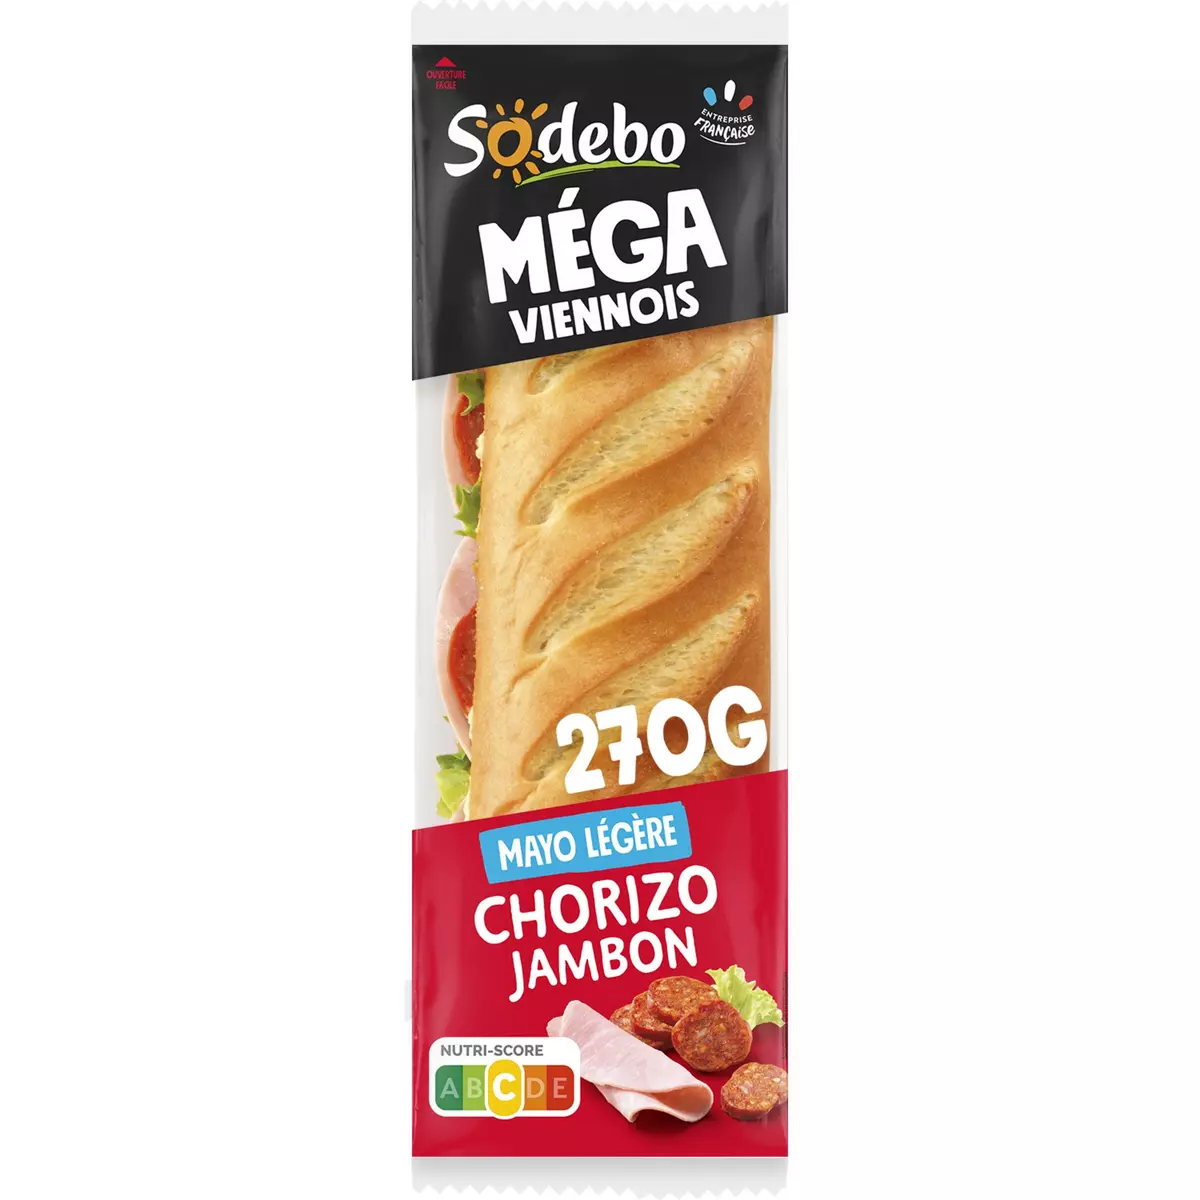 SODEBO Sandwich mega baguette viennois chorizo jambon mayo 1 portion 270g